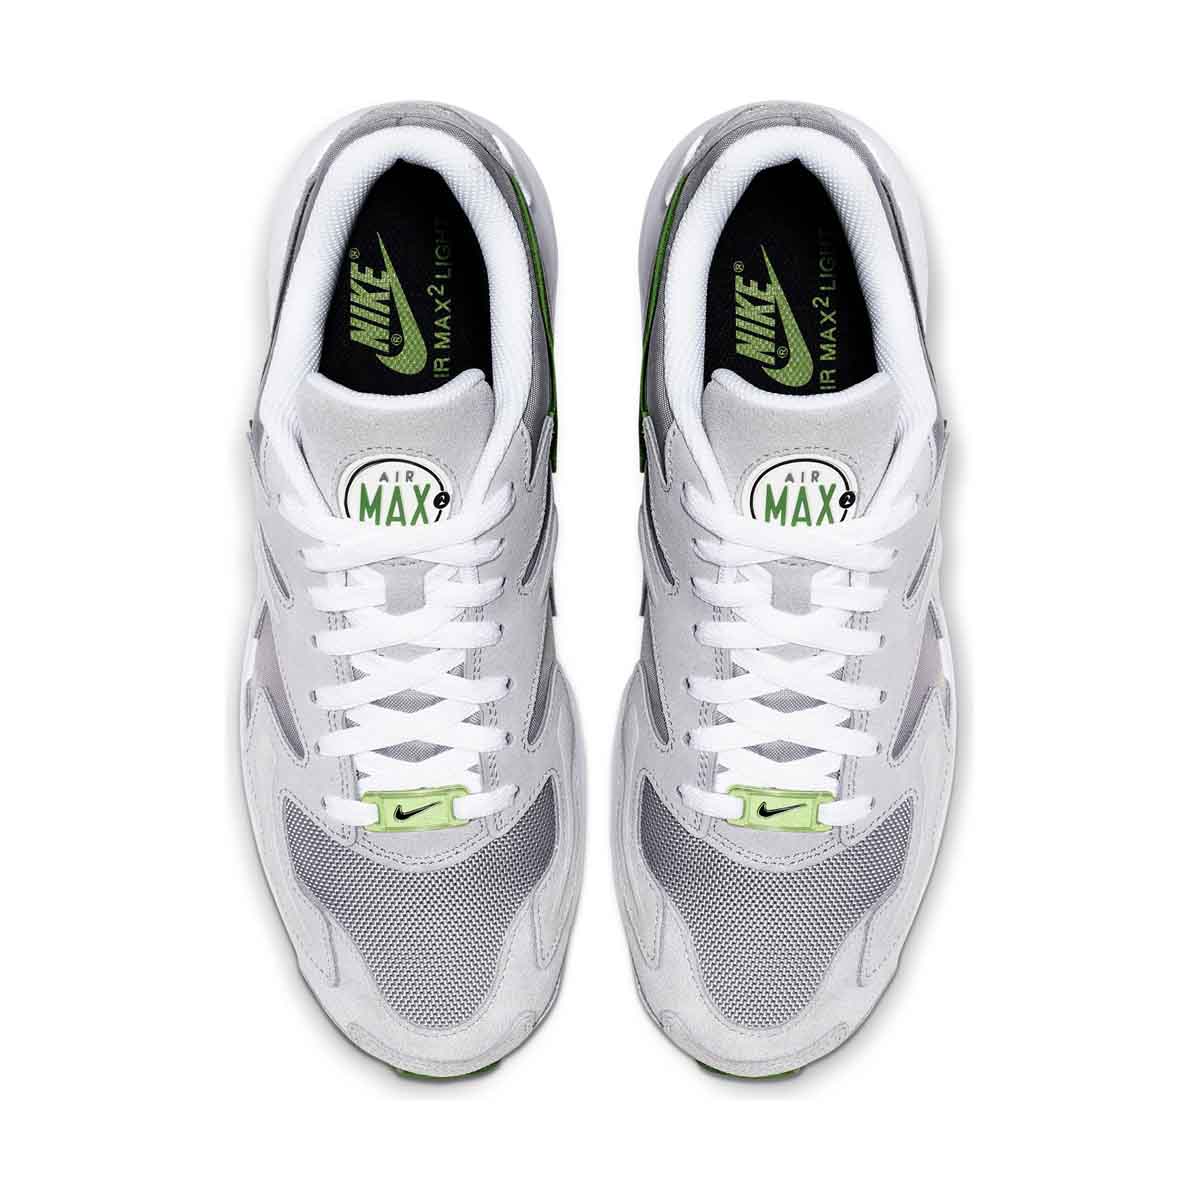 Men's Nike Air Max LX - Millennium Shoes